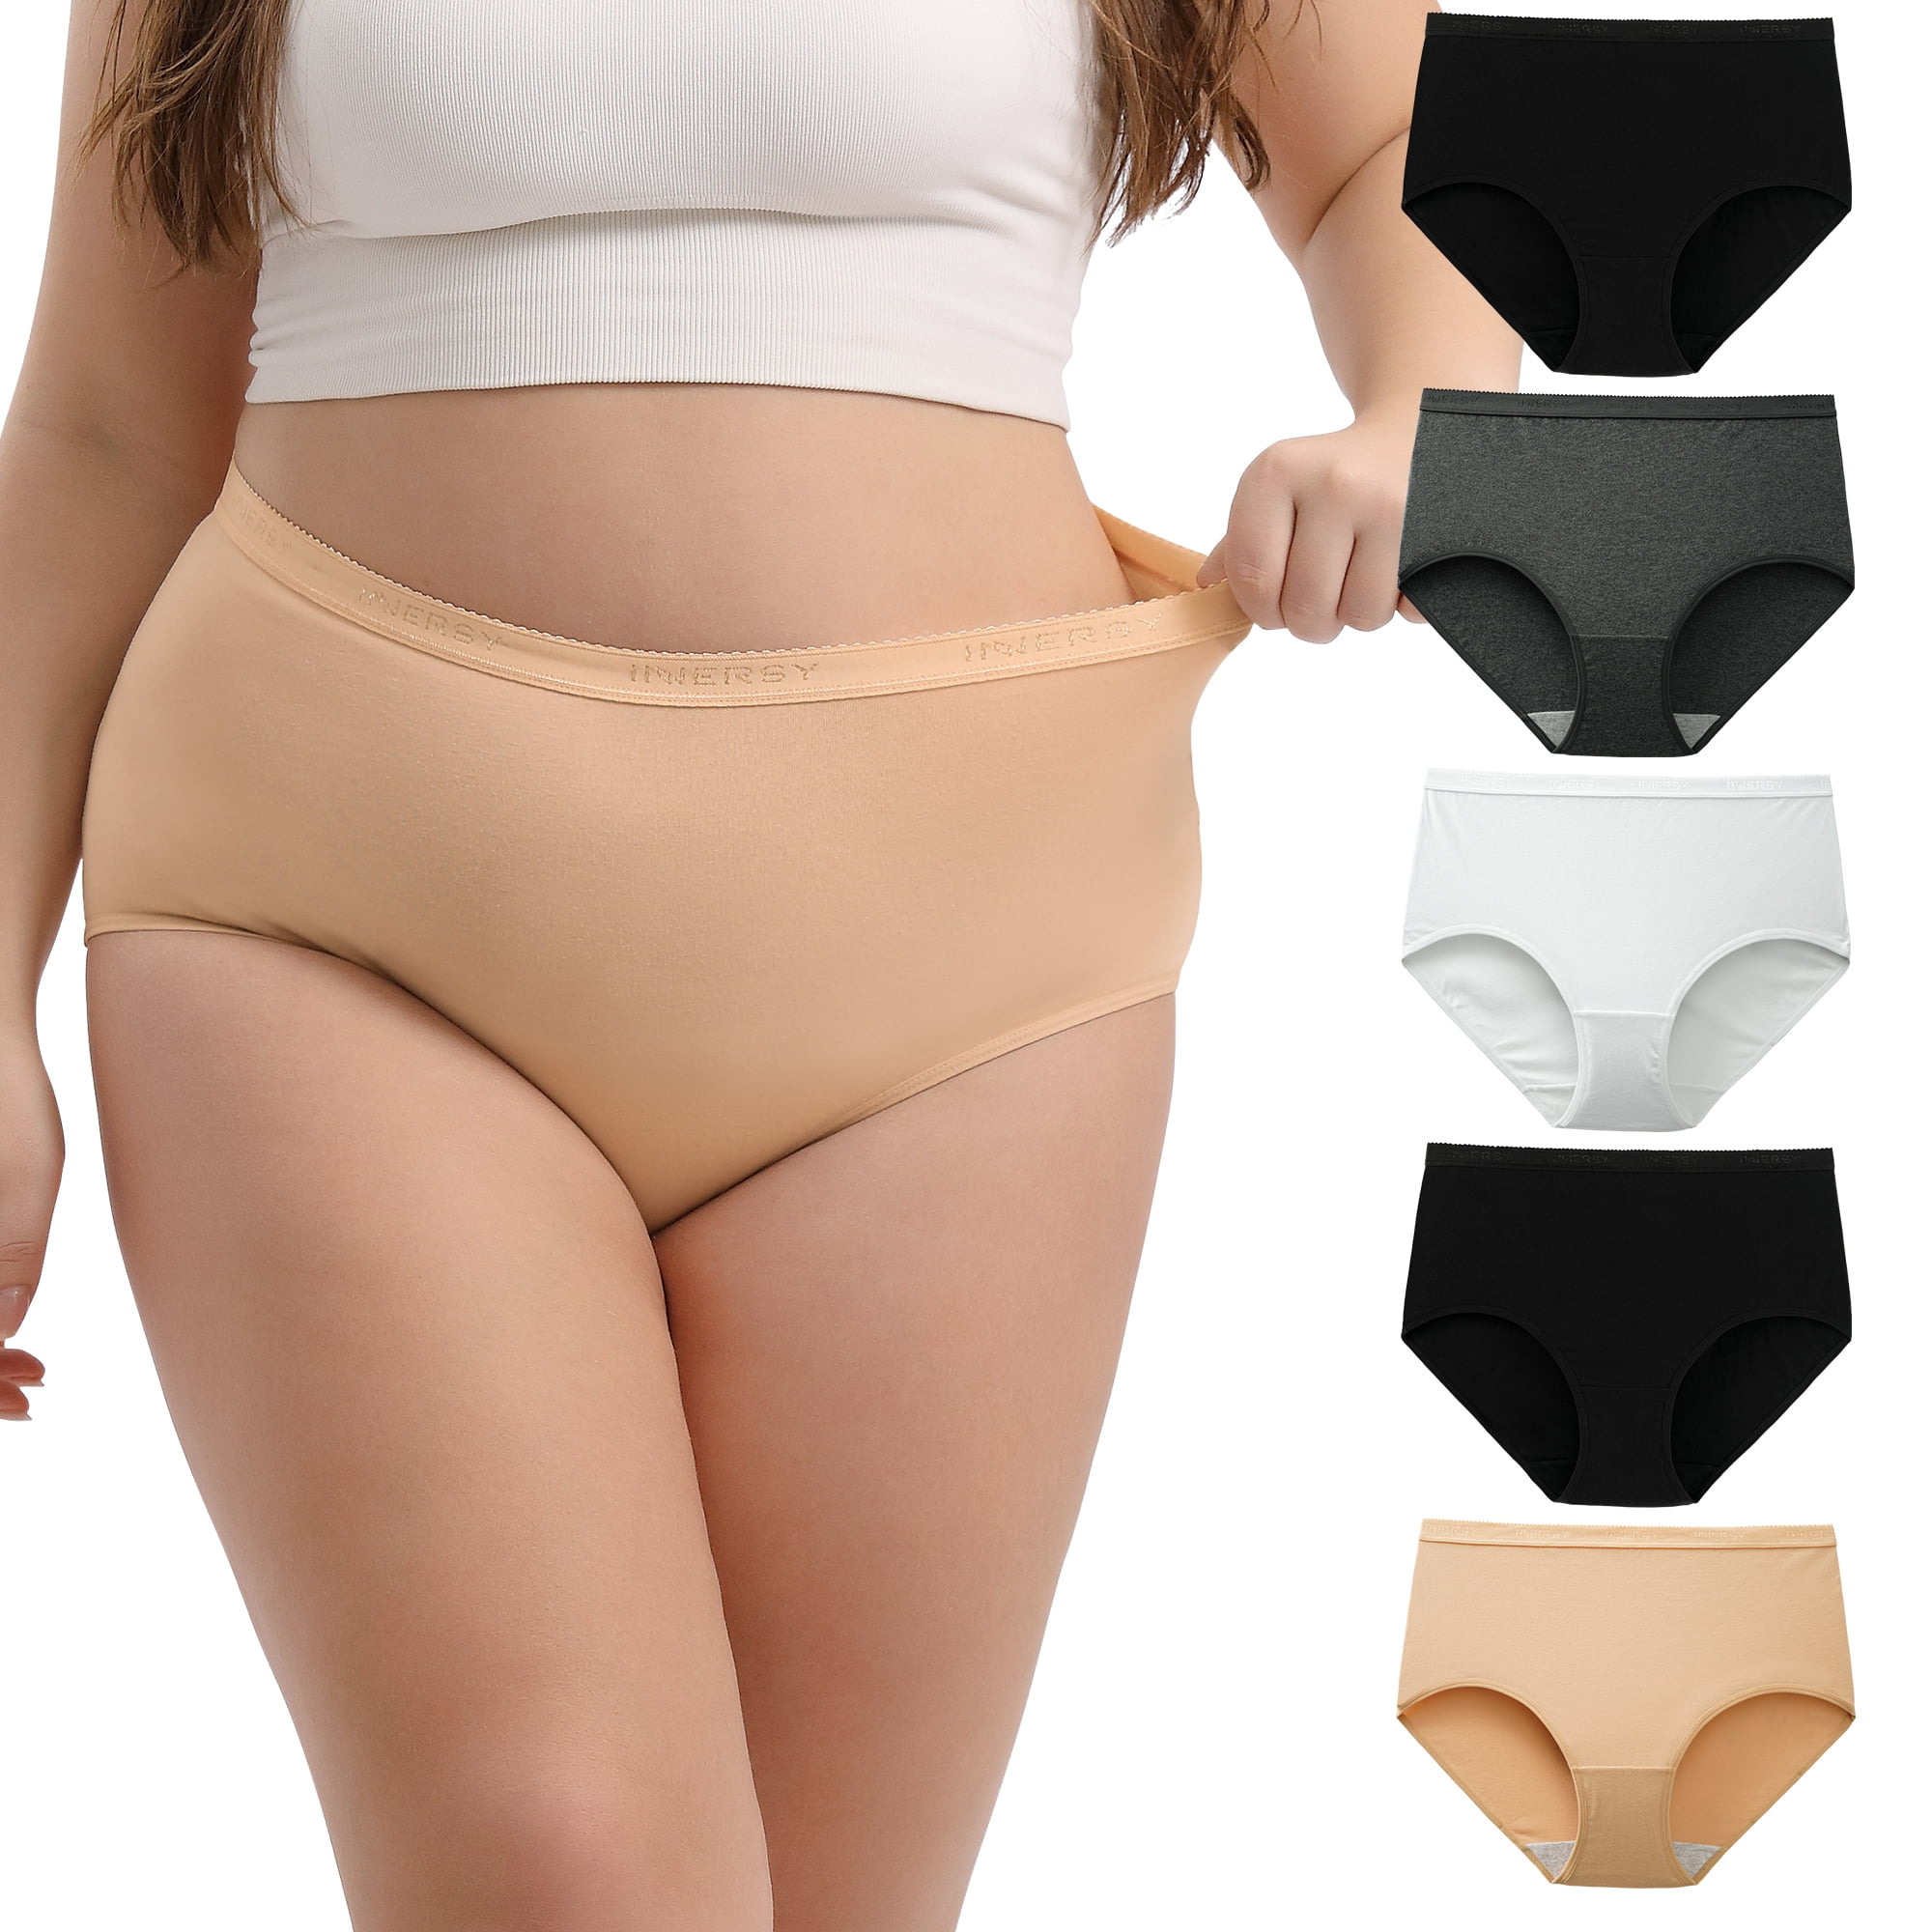 Lhked Women's Plus Size Bikini5PCS Silky Comfy Low Waist